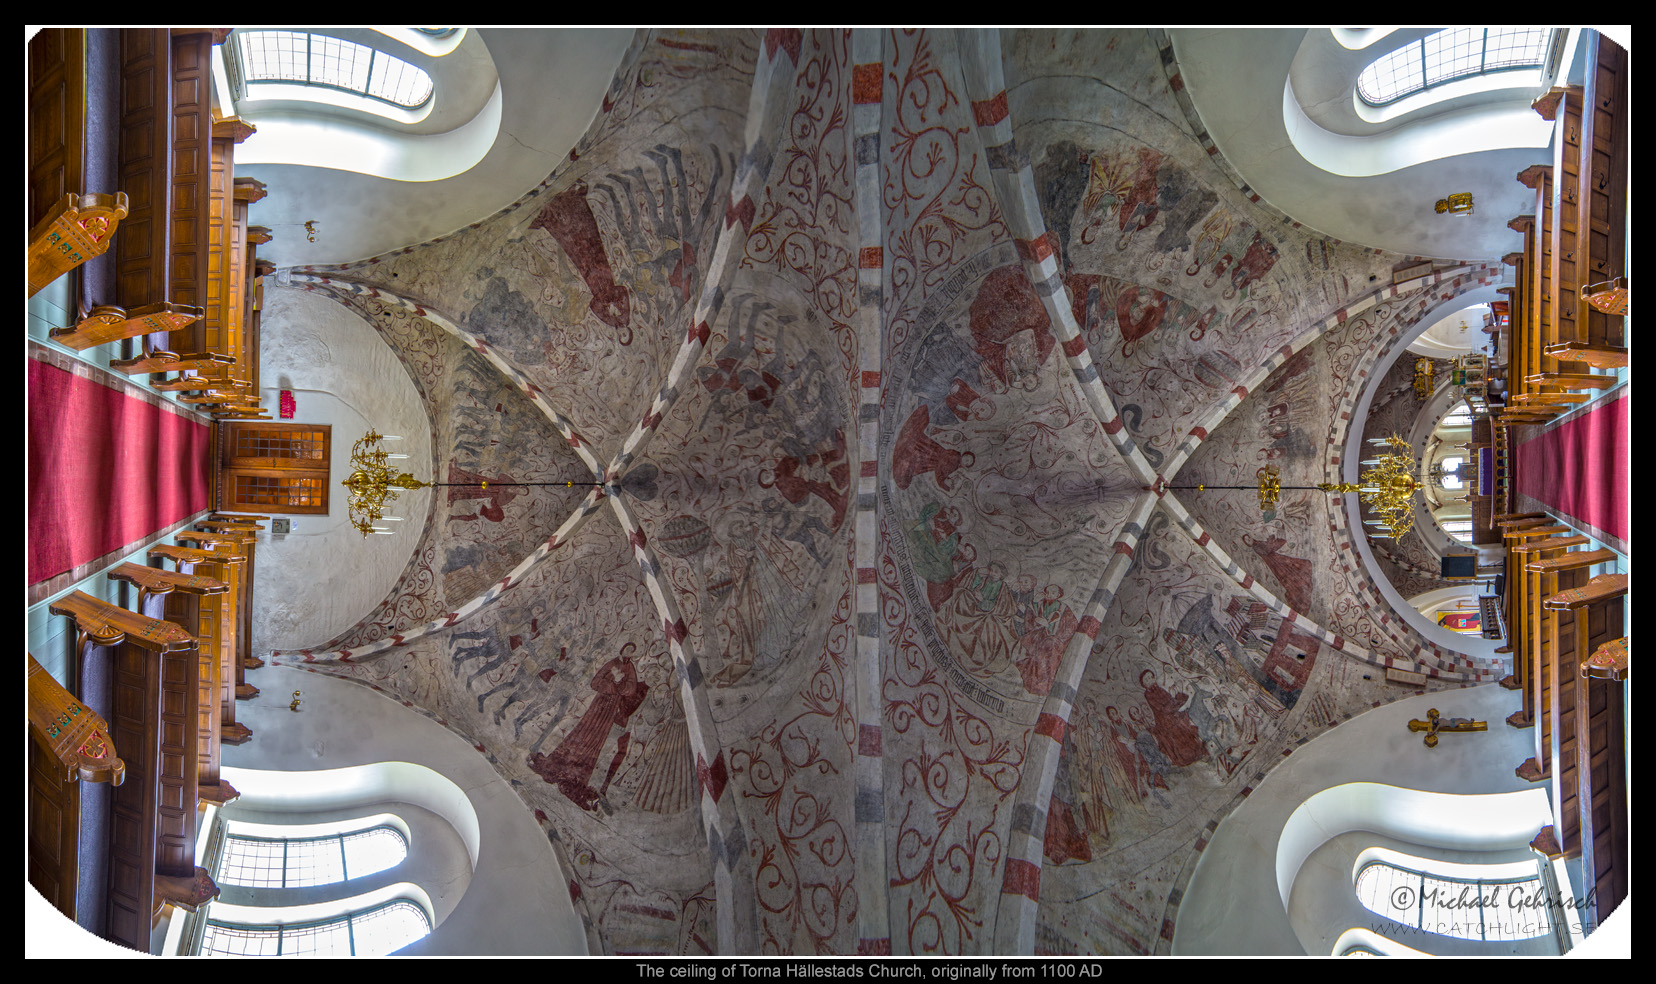 The Sistine Chapel of Torna Hllestad